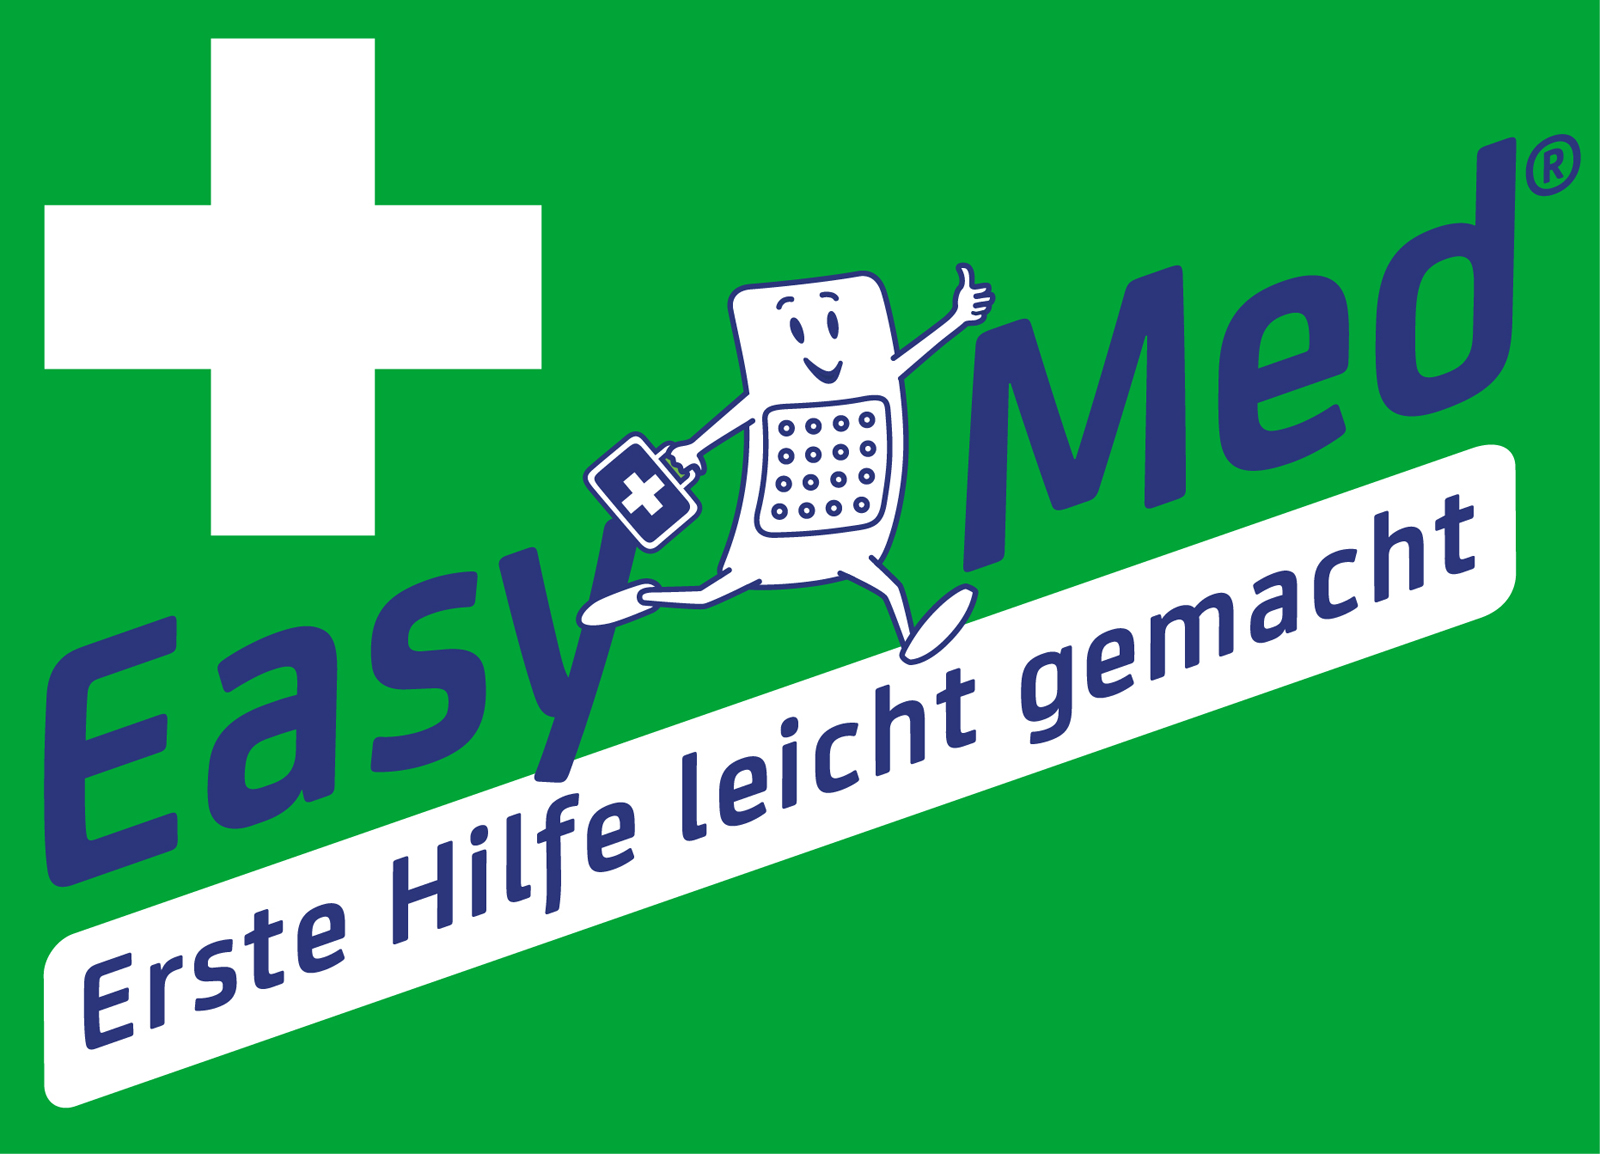 EasyMed Erste Hilfe Set Urlaub + Sport